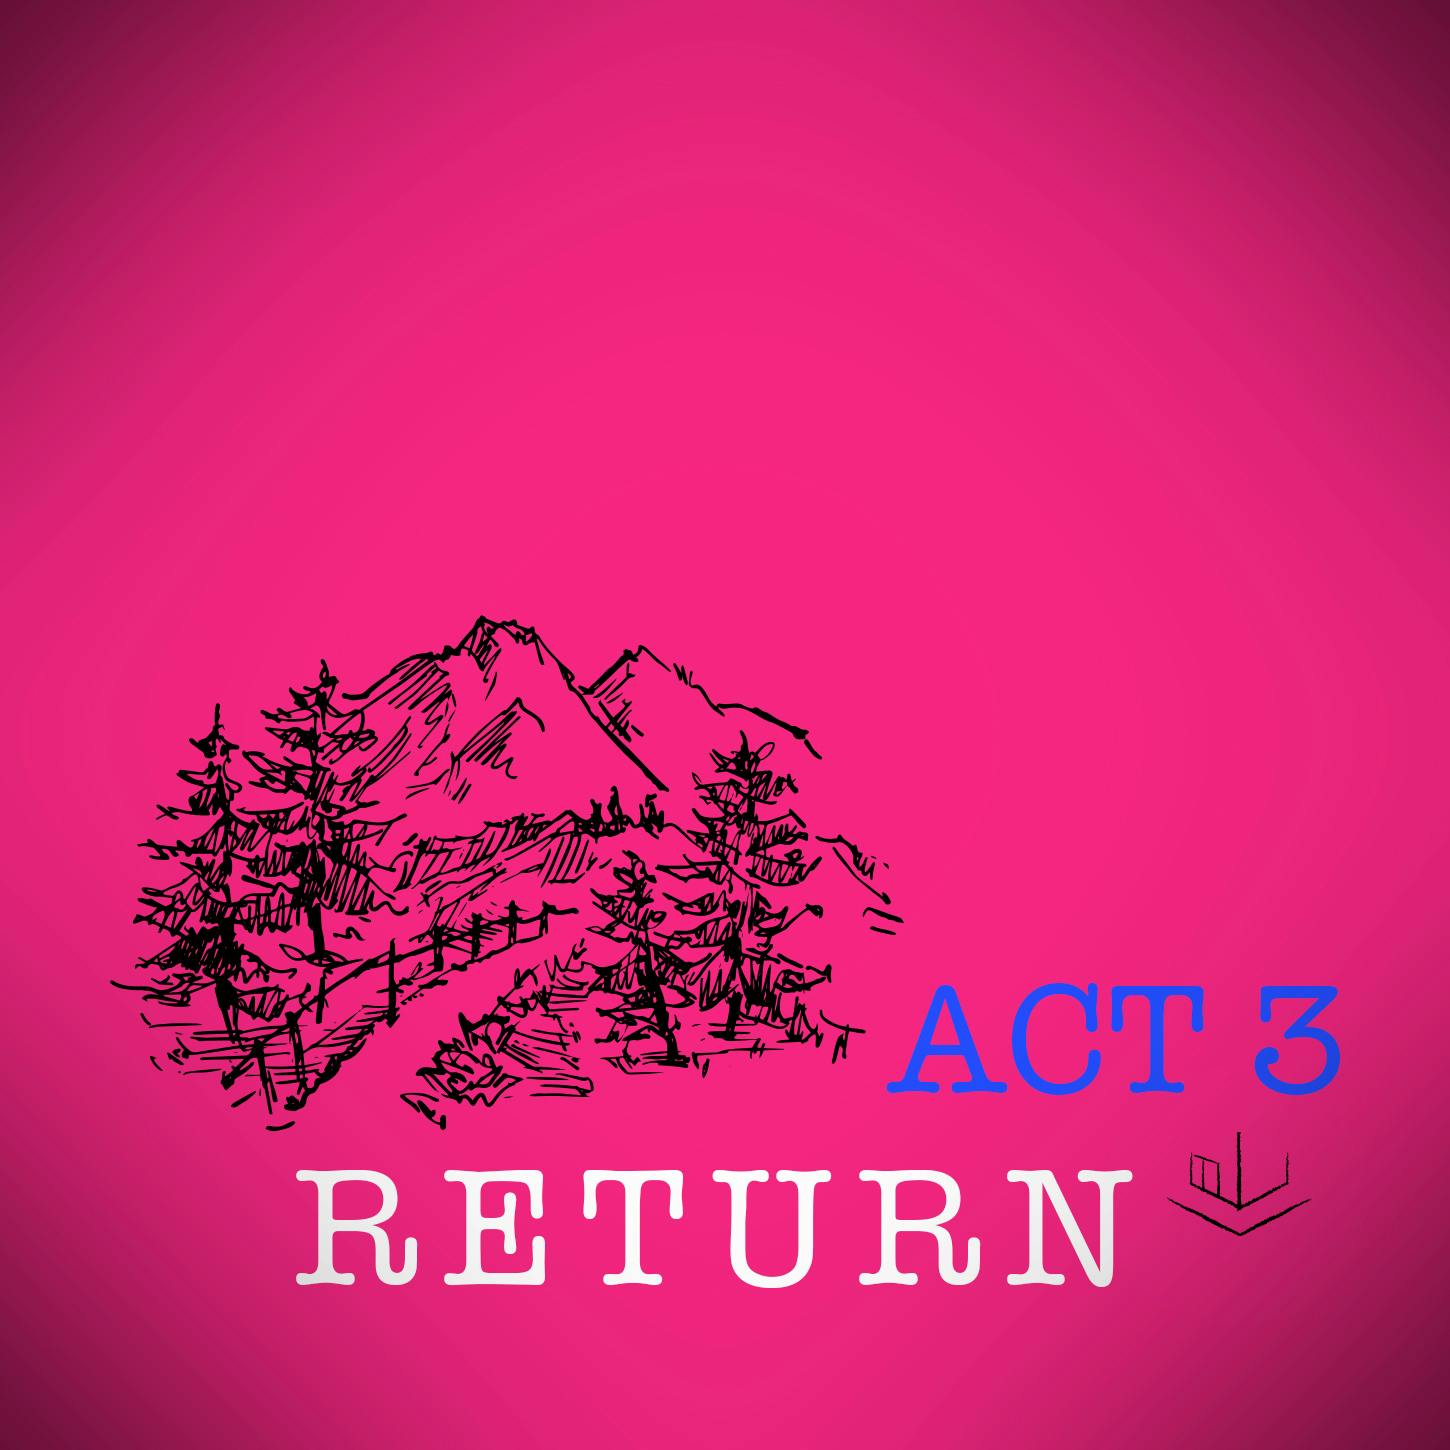 Lesson 26: Act 3 - Return